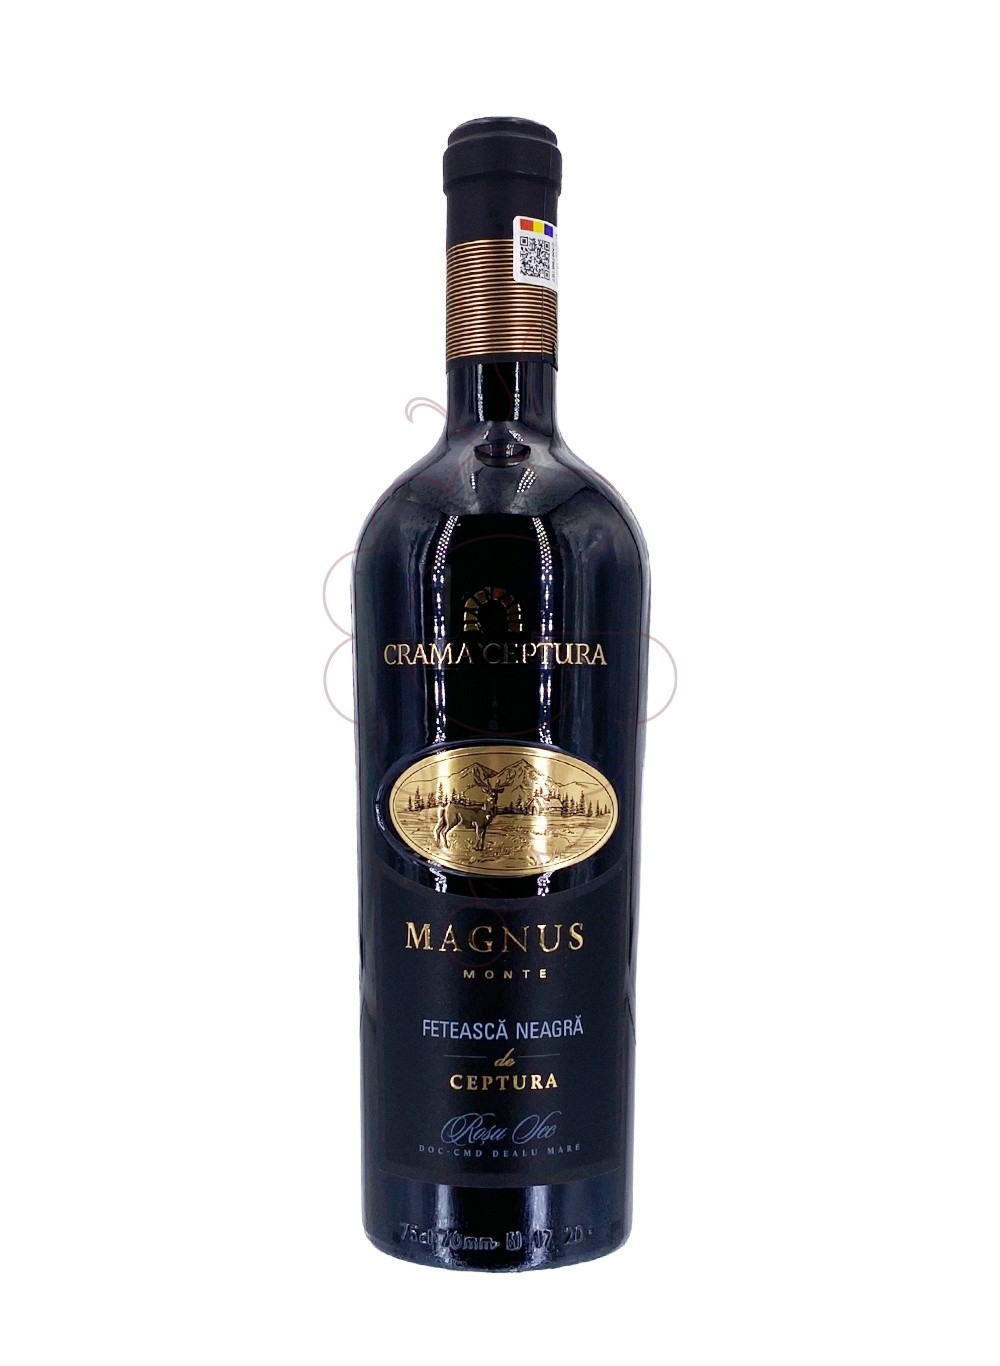 Foto Crama Ceptura Cervus Magnus Monte Feteasca Neagra vino tinto